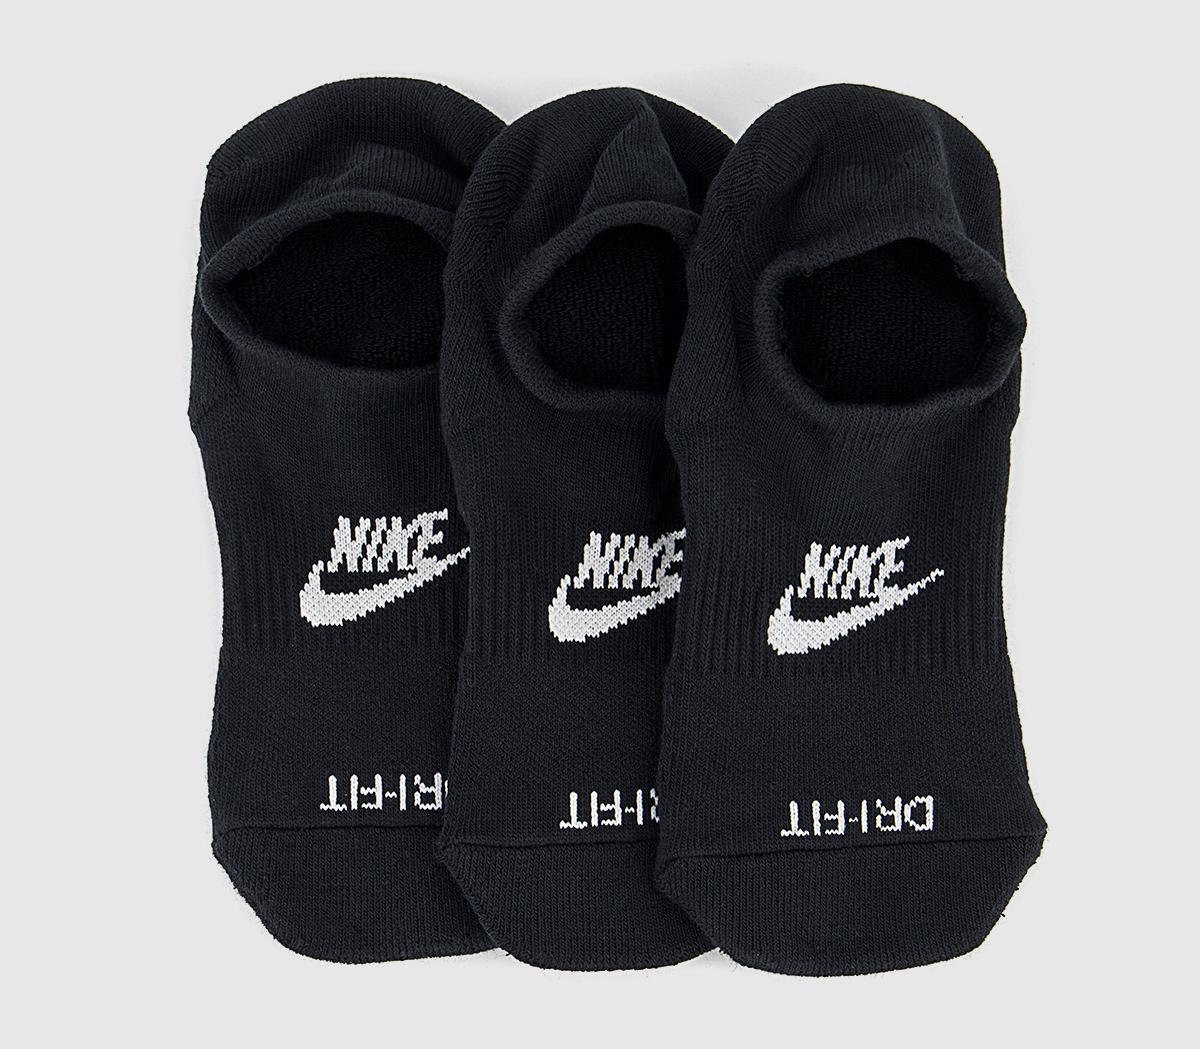 Nike Footie Socks Black White, L